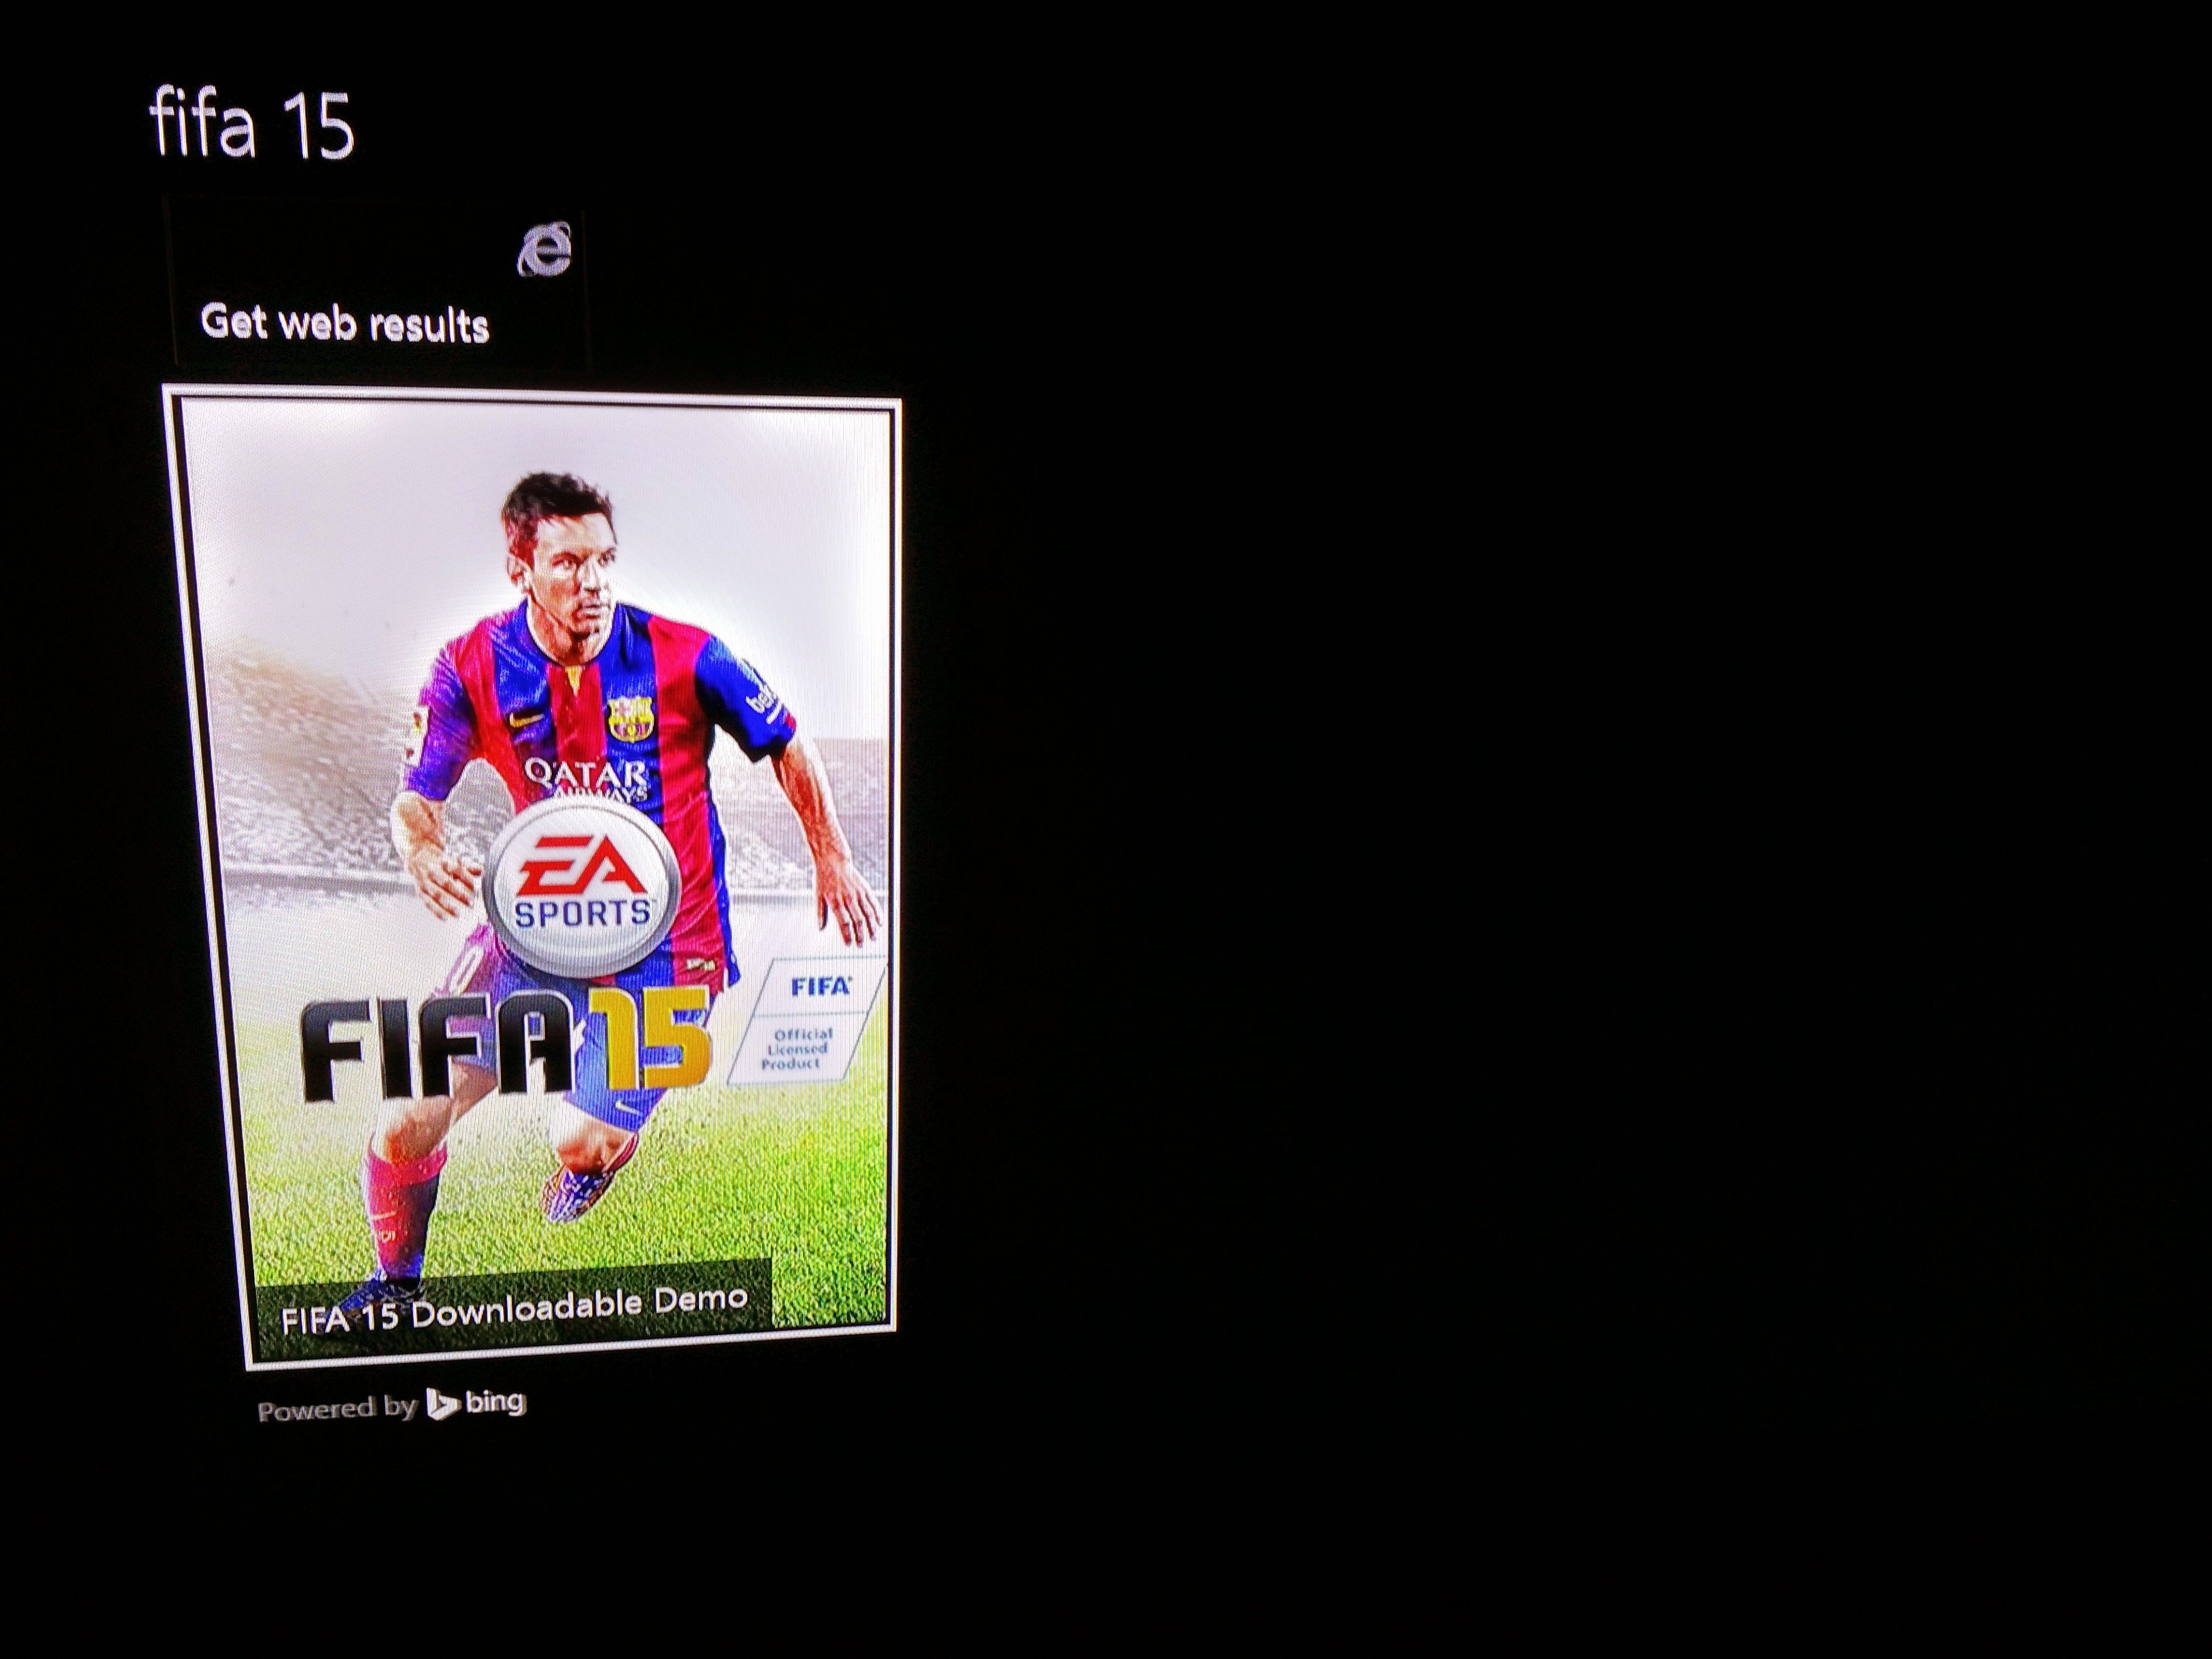 Fifa 15 Demo Release Arrives